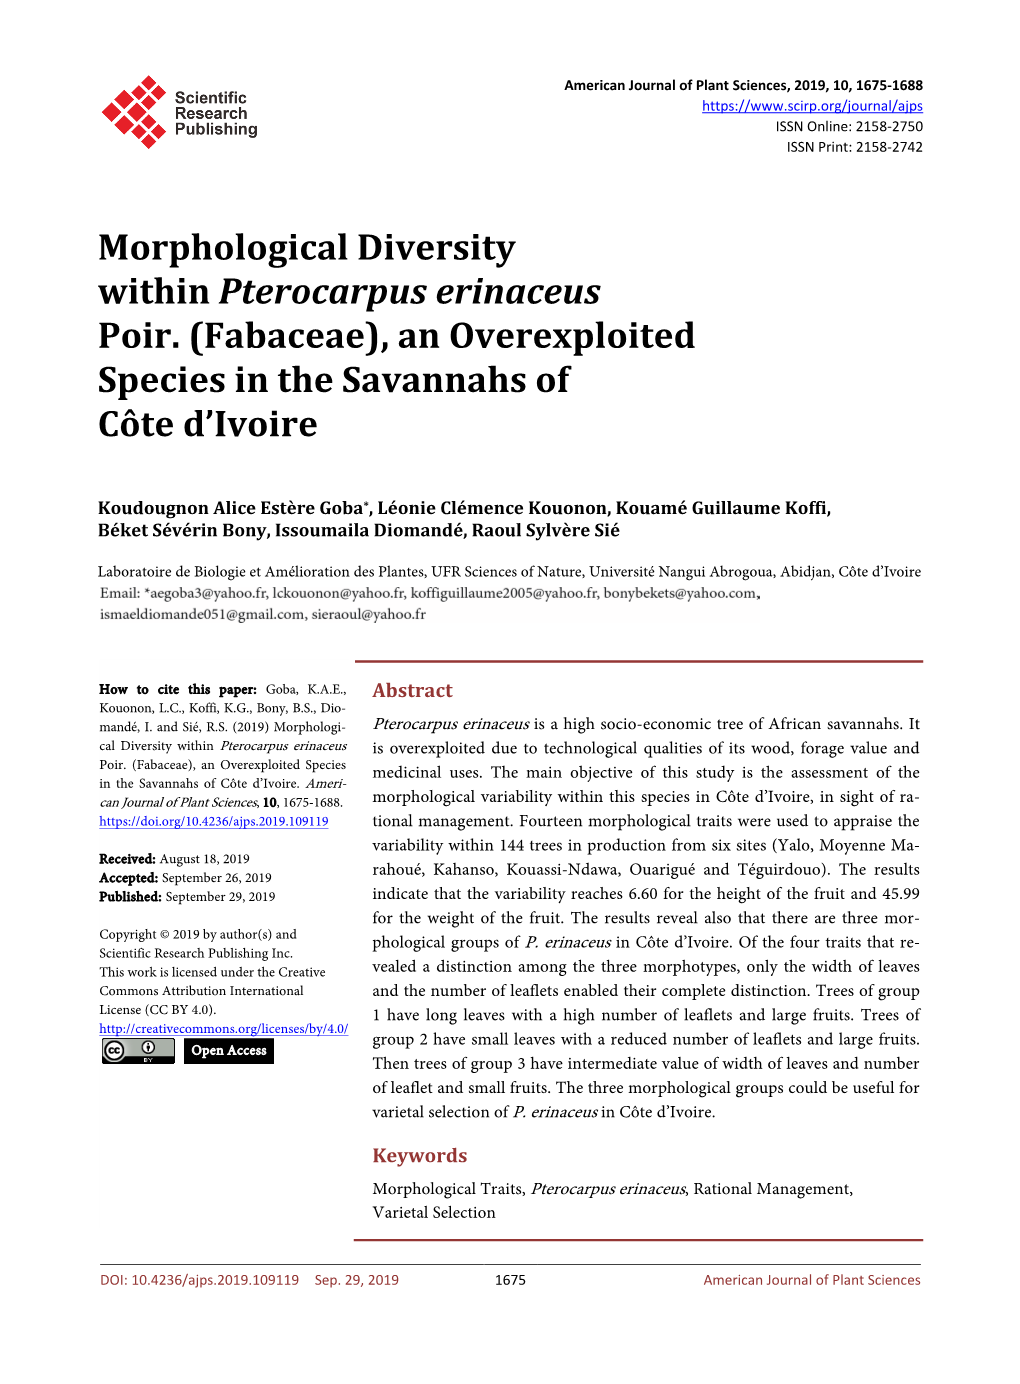 Morphological Diversity Within Pterocarpus Erinaceus Poir. (Fabaceae), an Overexploited Species in the Savannahs of Côte D’Ivoire